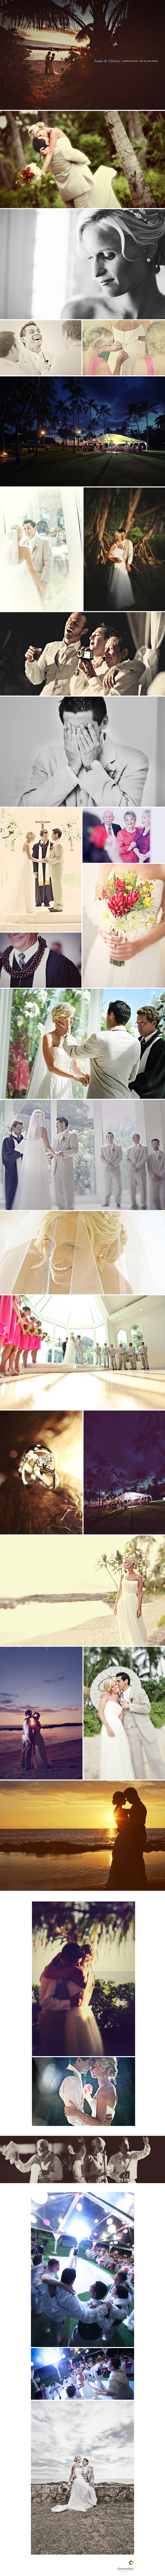 Shawn Starr : Modern Wedding Photography : Pittsburgh Wedding Photographer : Lanikuhonua